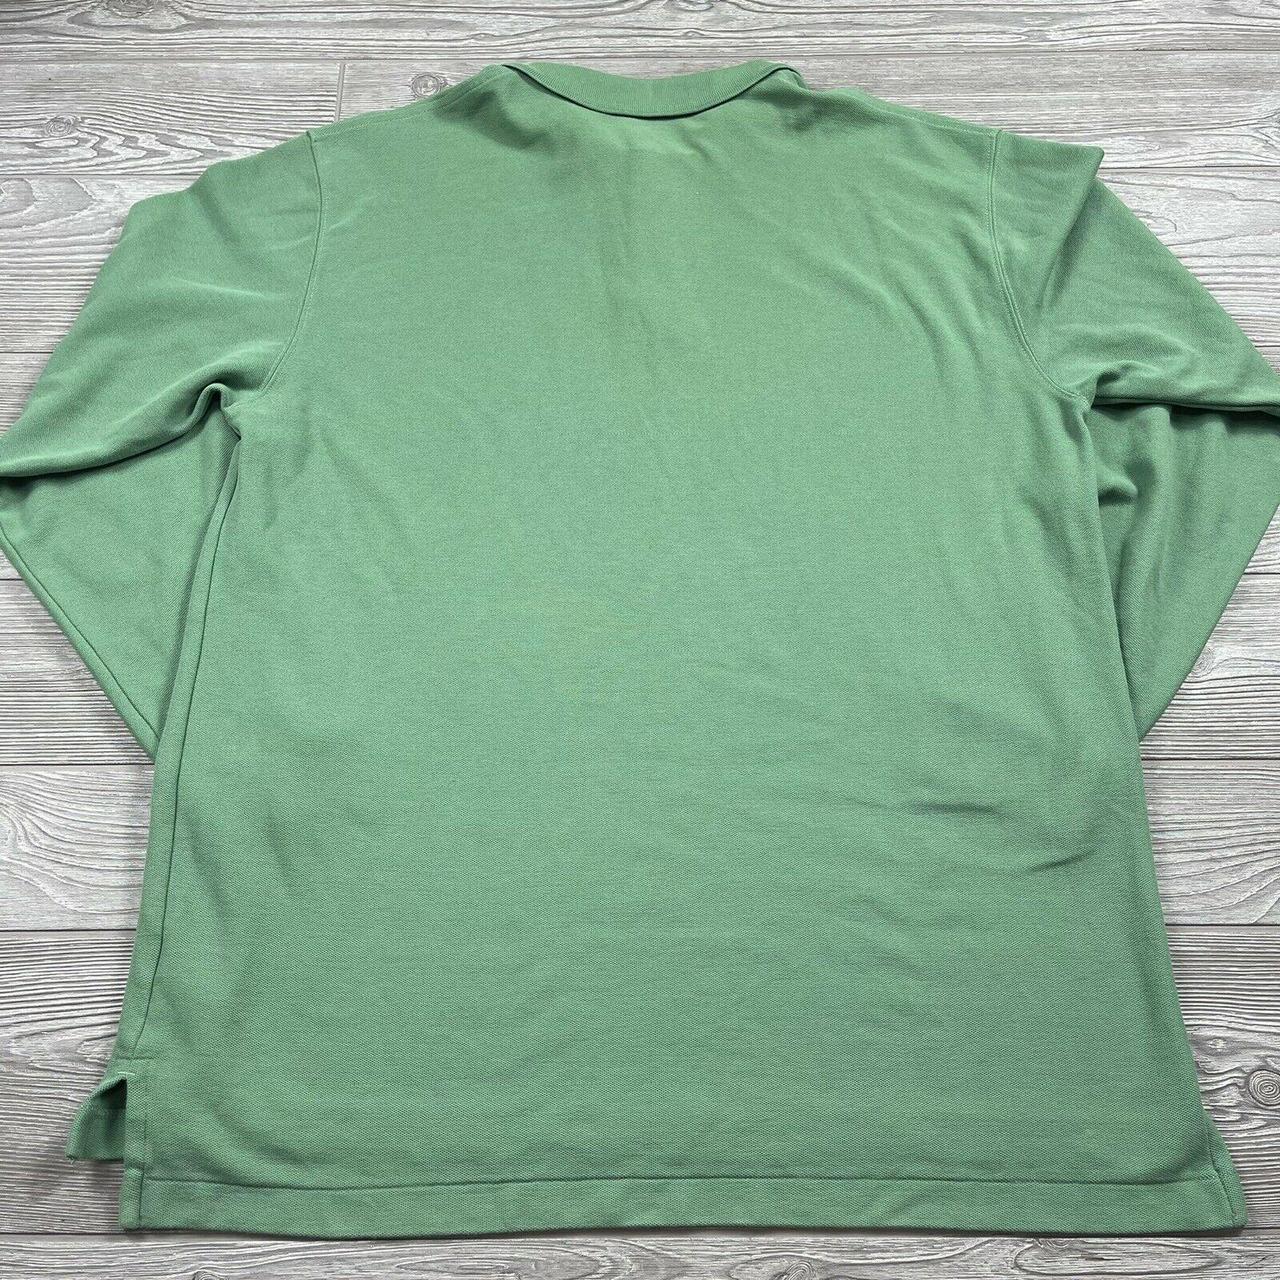 LL Bean Rugby Shirt Mens Large Green Long Sleeve... - Depop